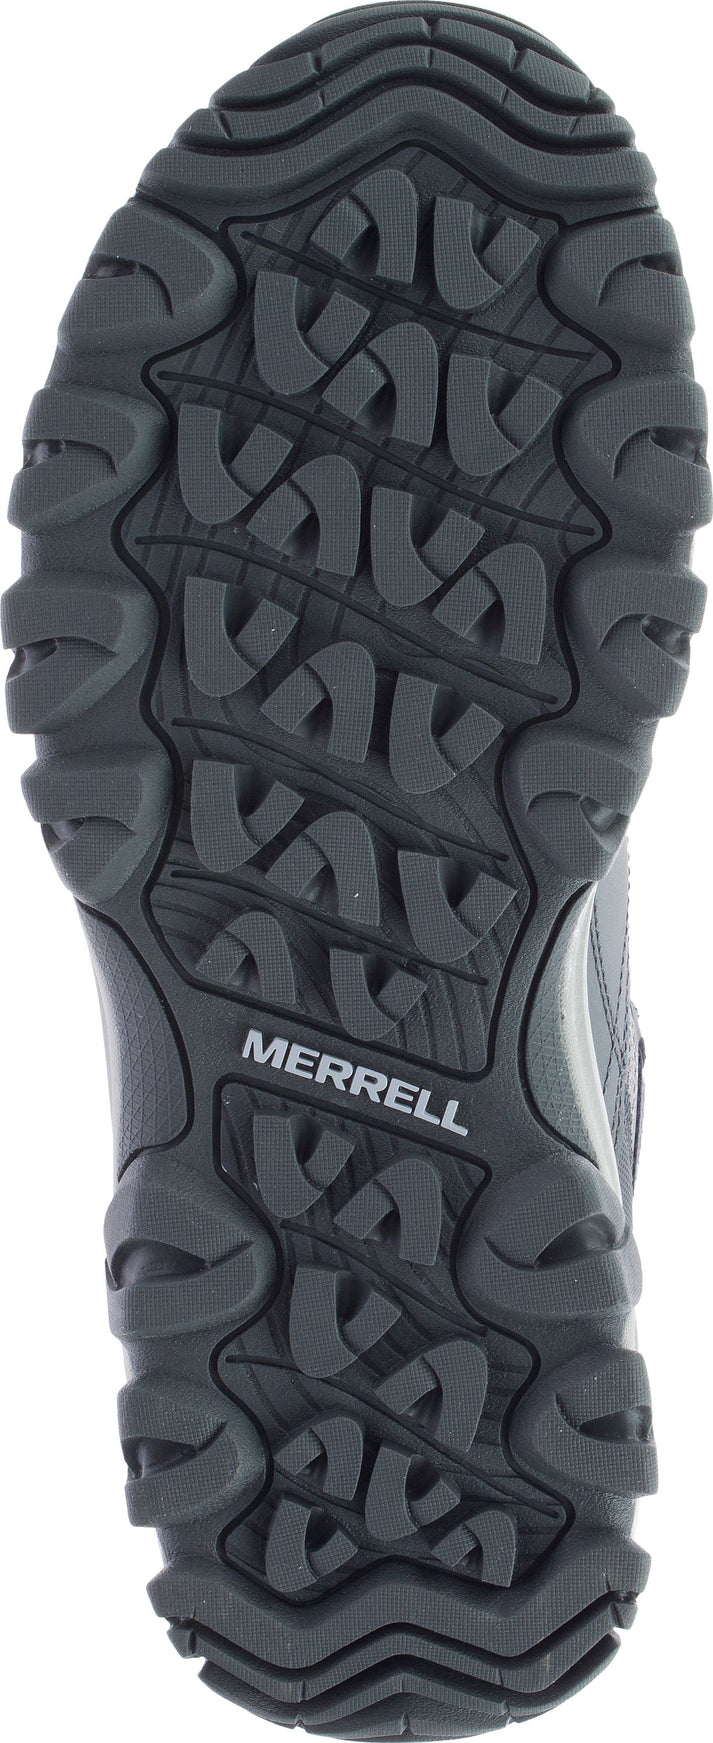 Merrell Boots Thermo Akita Mid Waterproof Charcoal